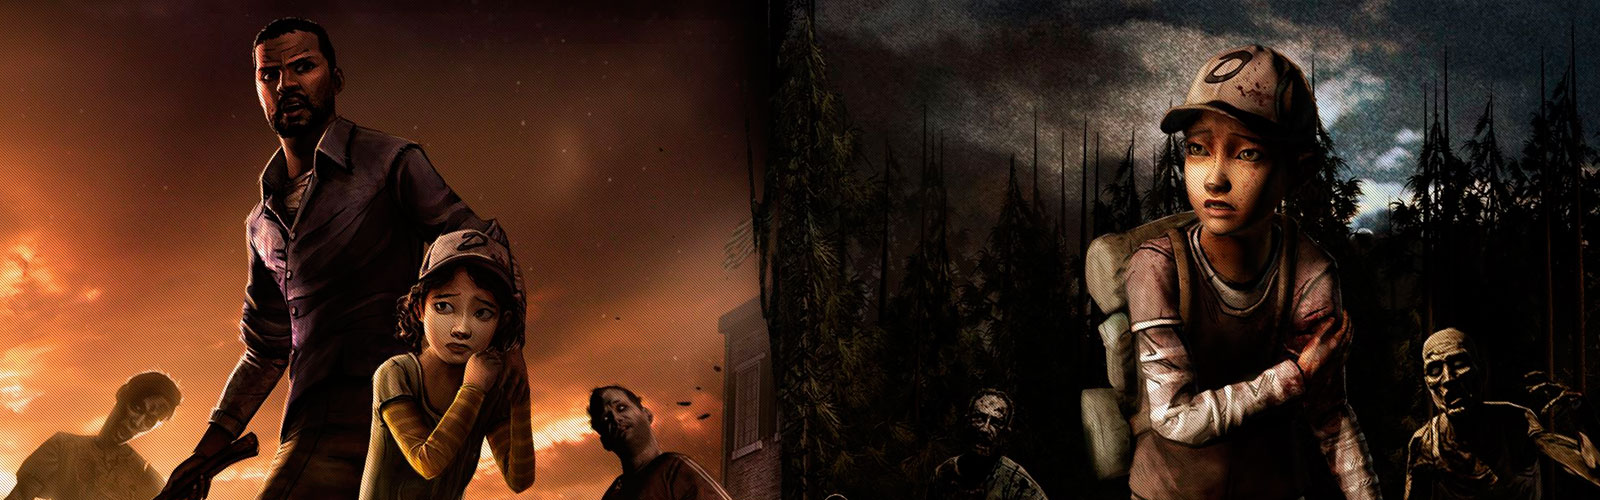 Análise - The Walking Dead: Season 1 & 2 Cover